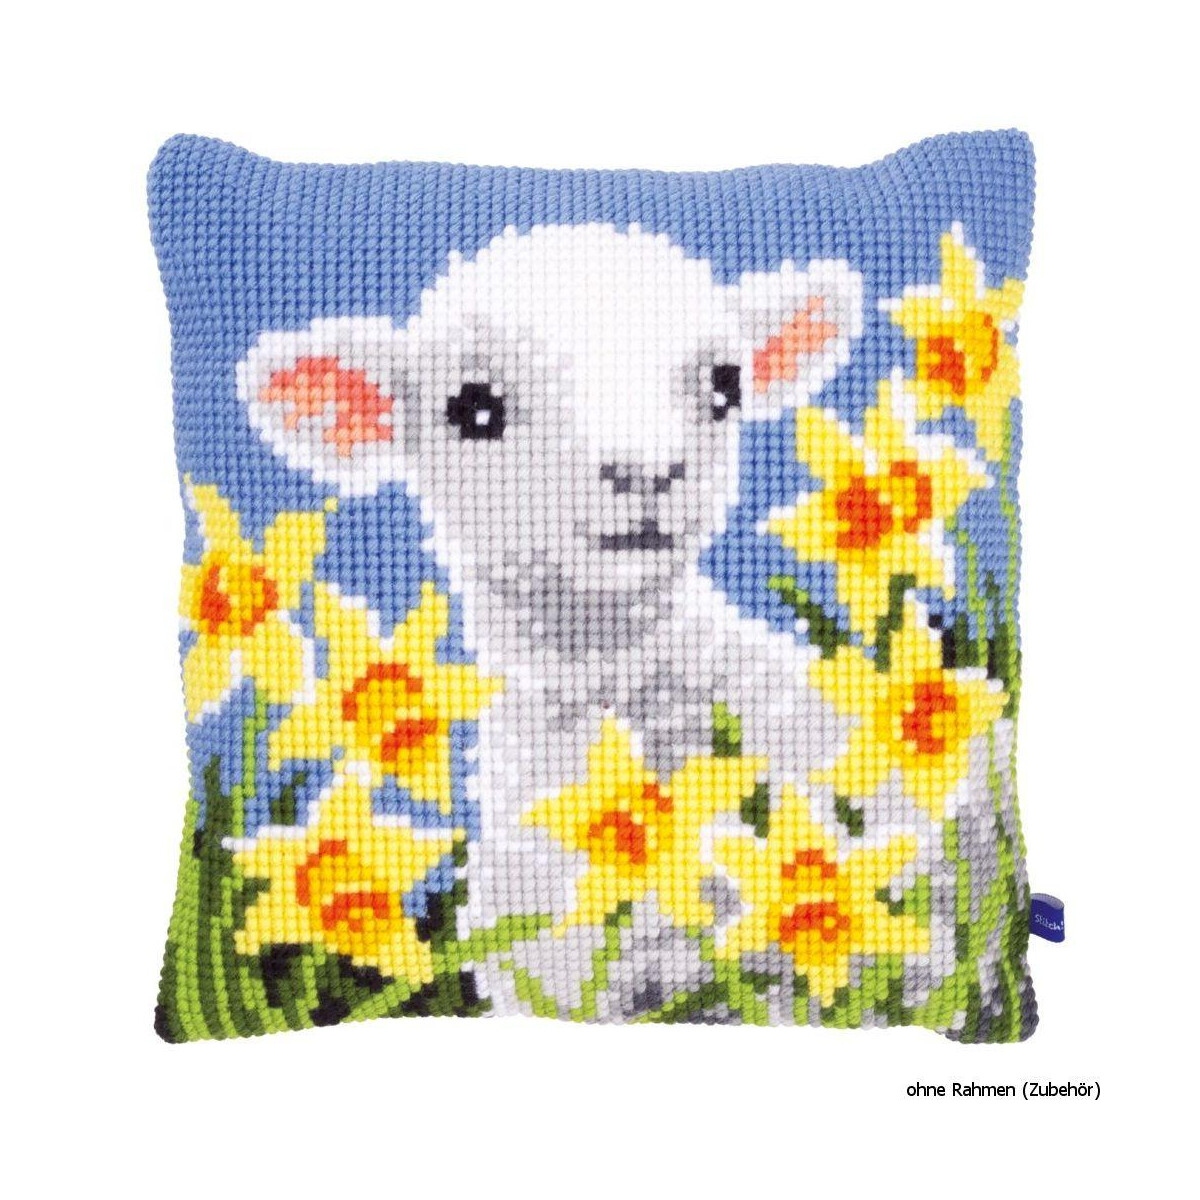 Vervaco stamped cross stitch kit cushion Lamb, DIY